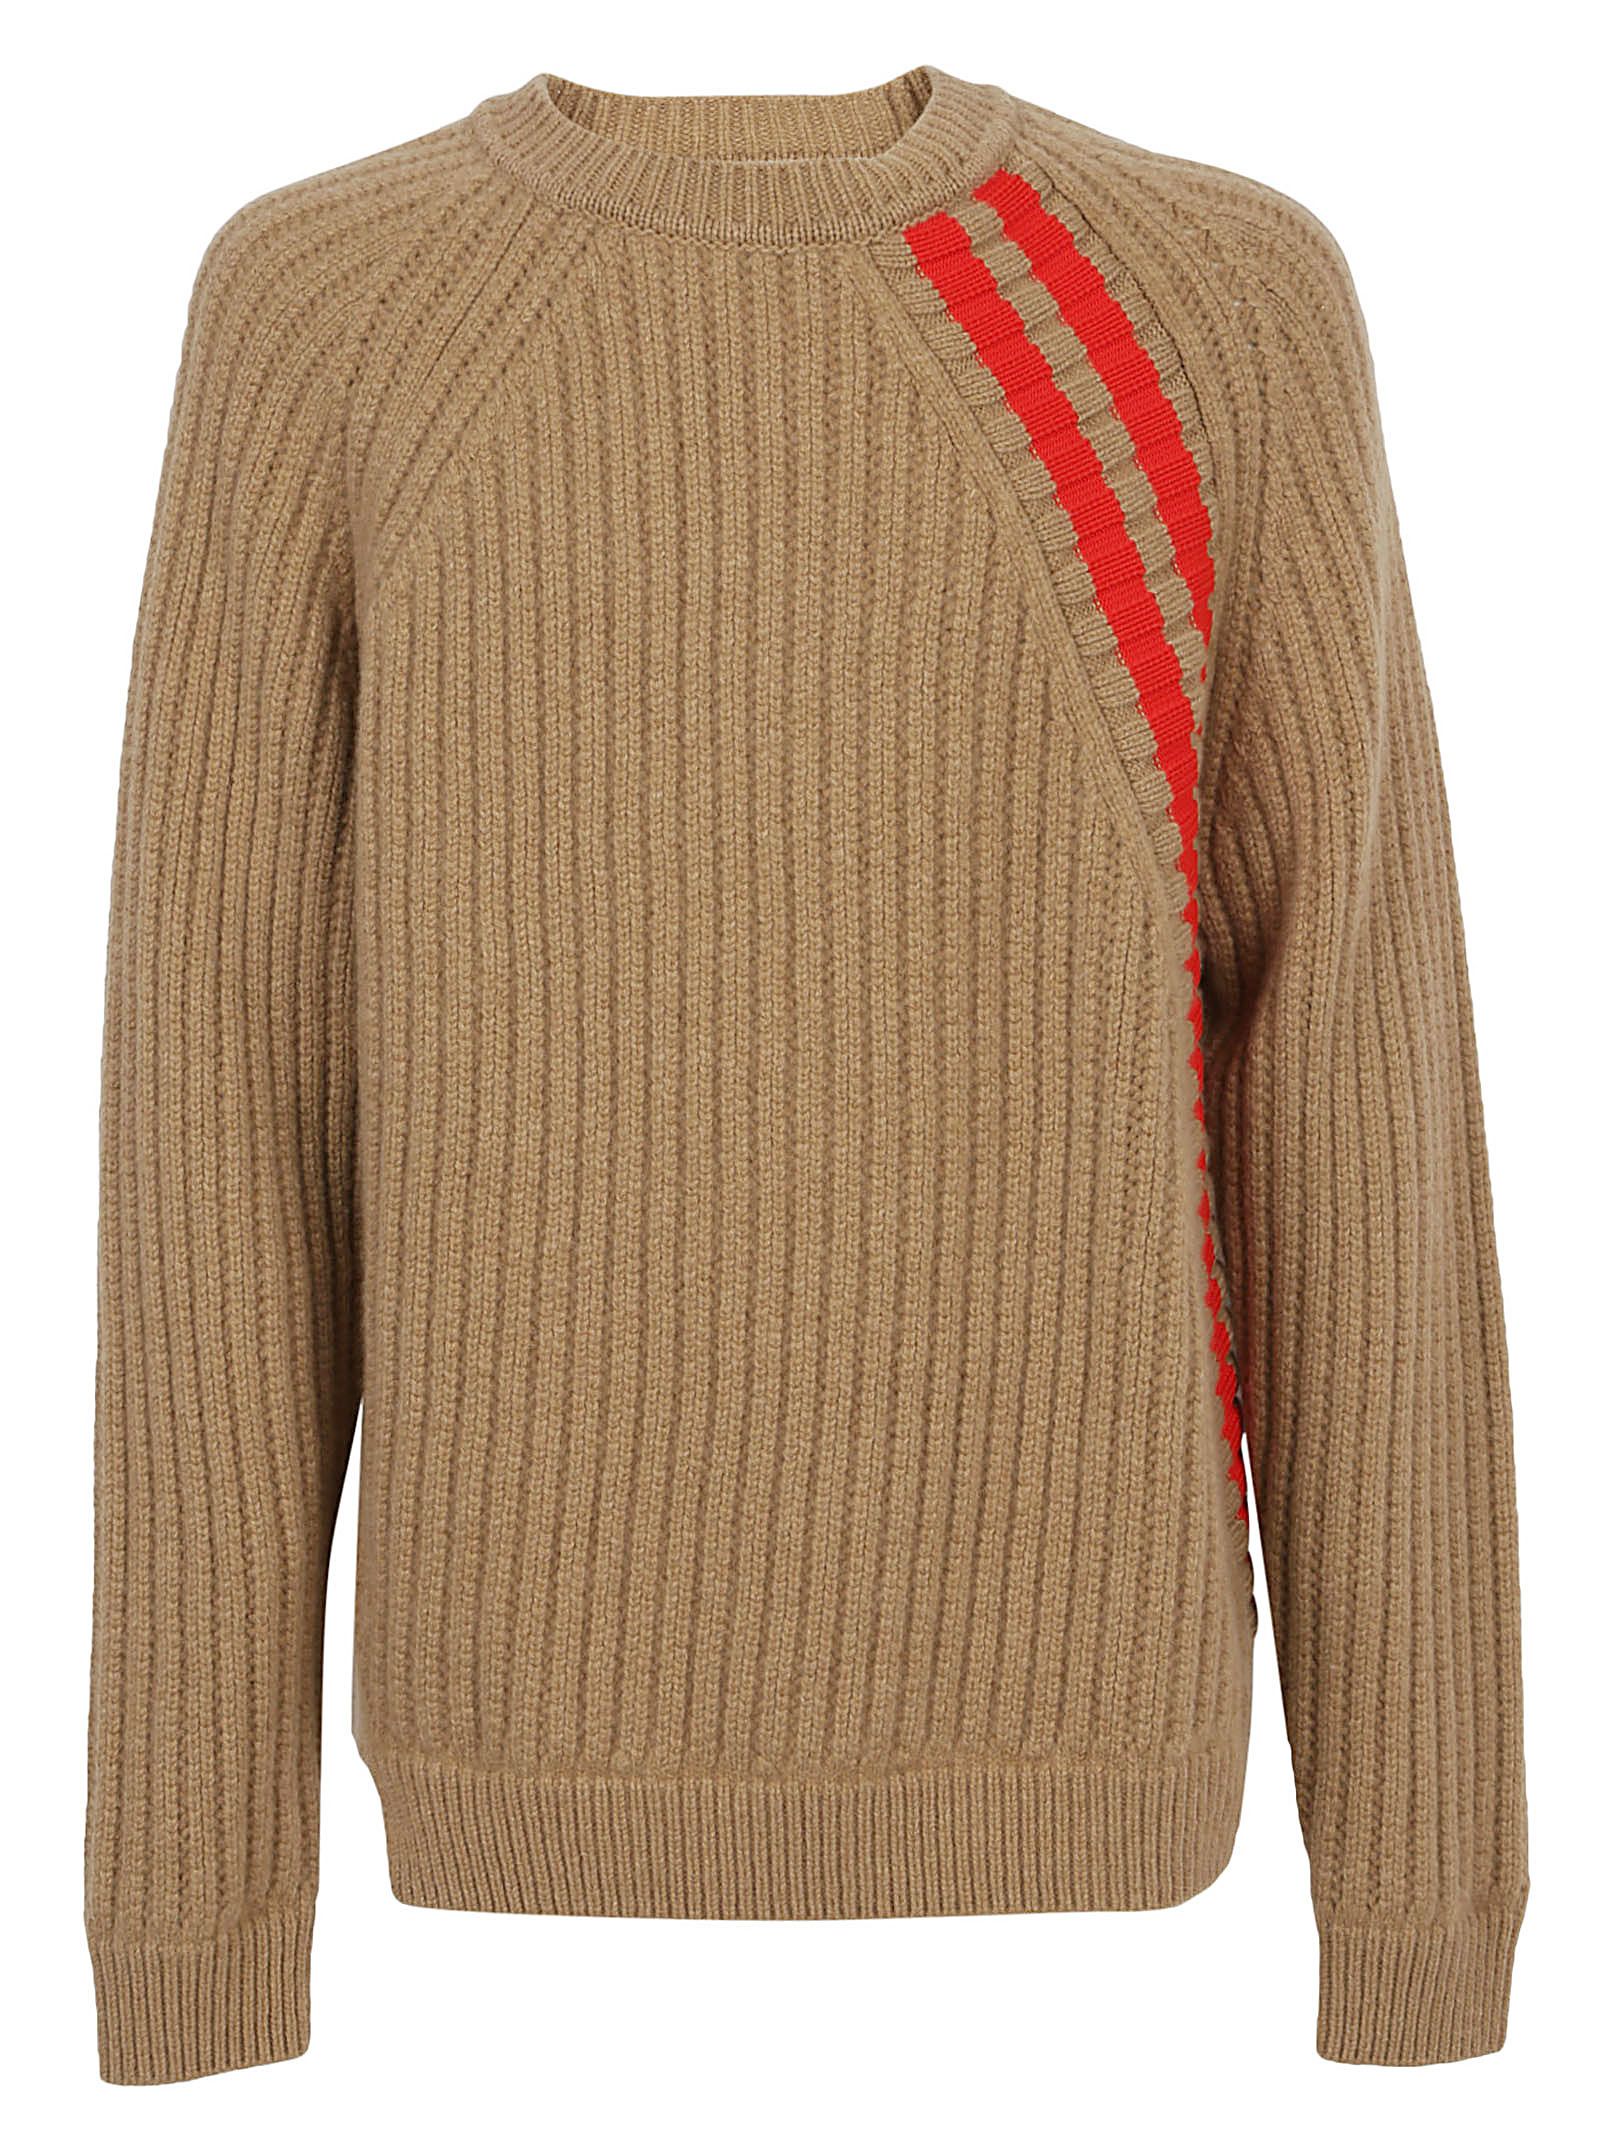 italist | Best price in the market for Jil Sander Jil Sander Sweater